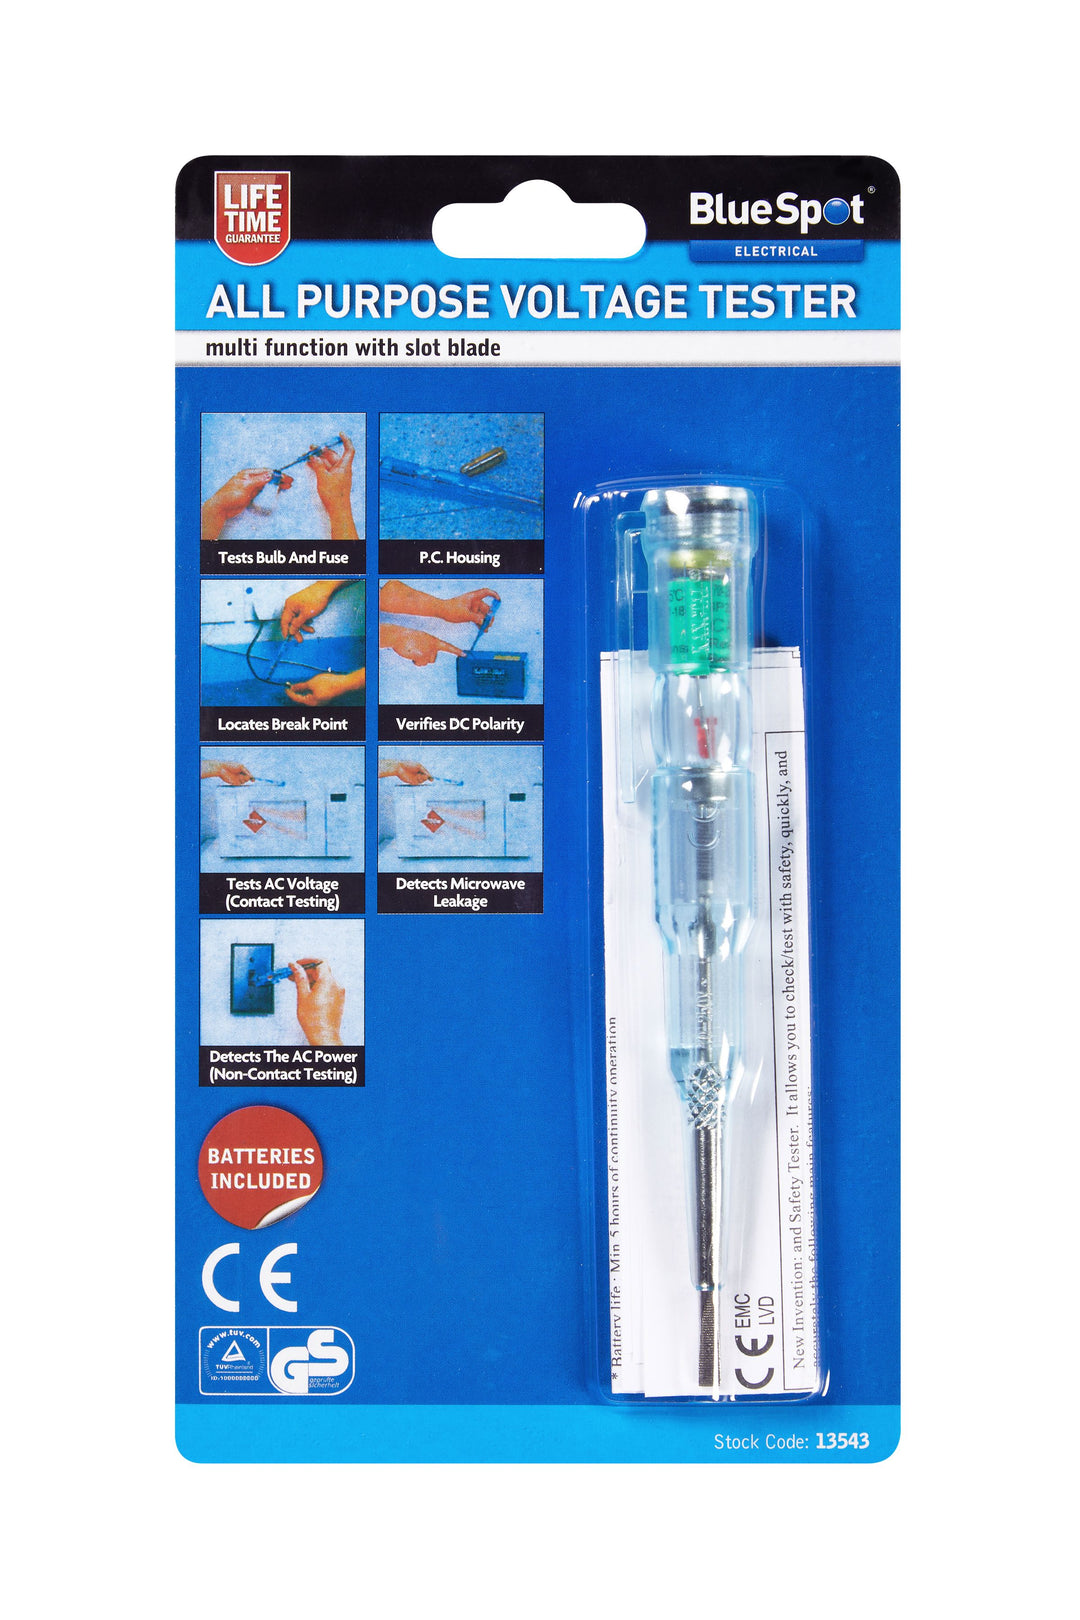 All Purpose Voltage Tester